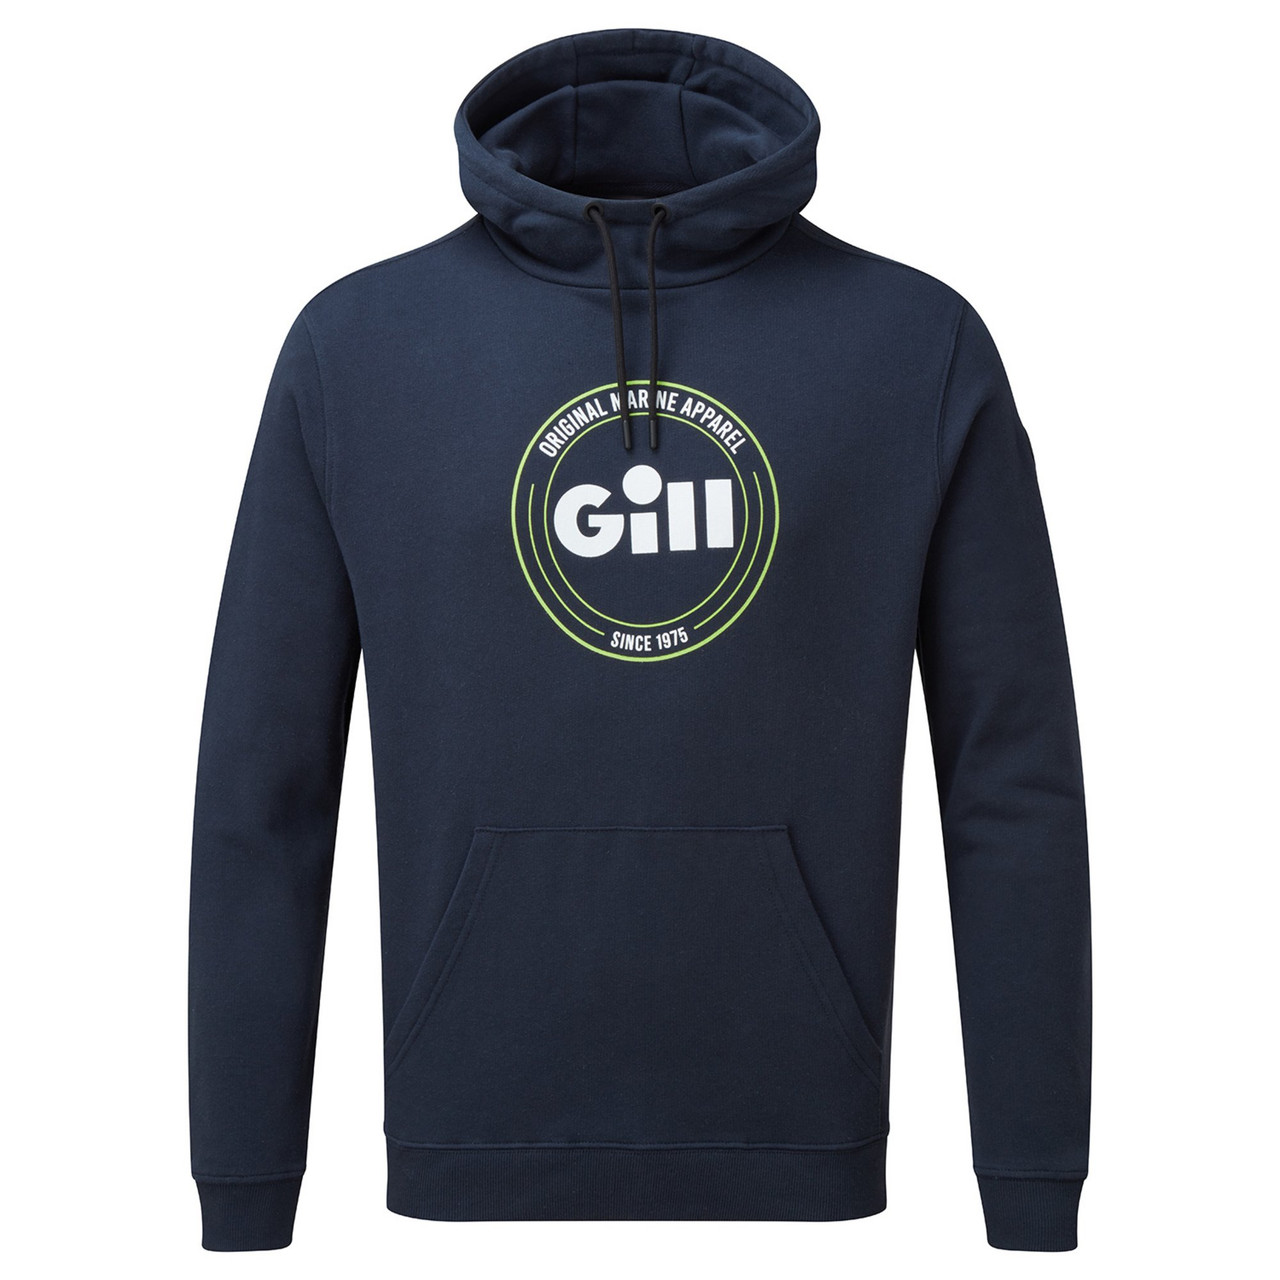 Gillz Tournament Series Long-Sleeve Hoodie for Men - Grey - XL